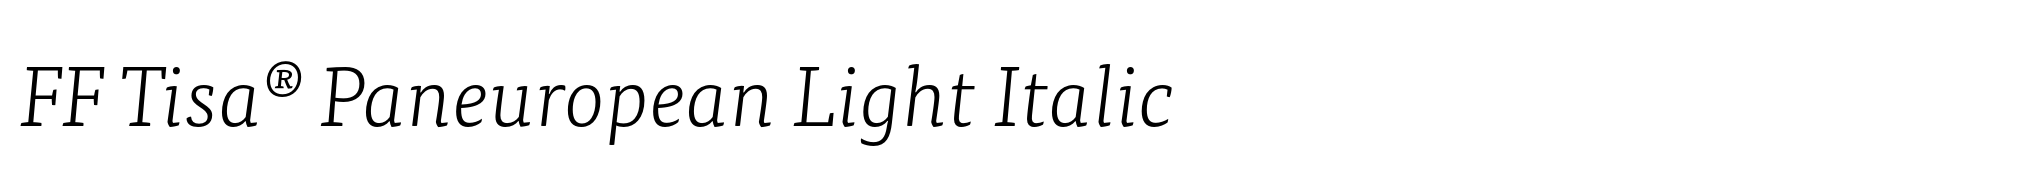 FF Tisa® Paneuropean Light Italic image